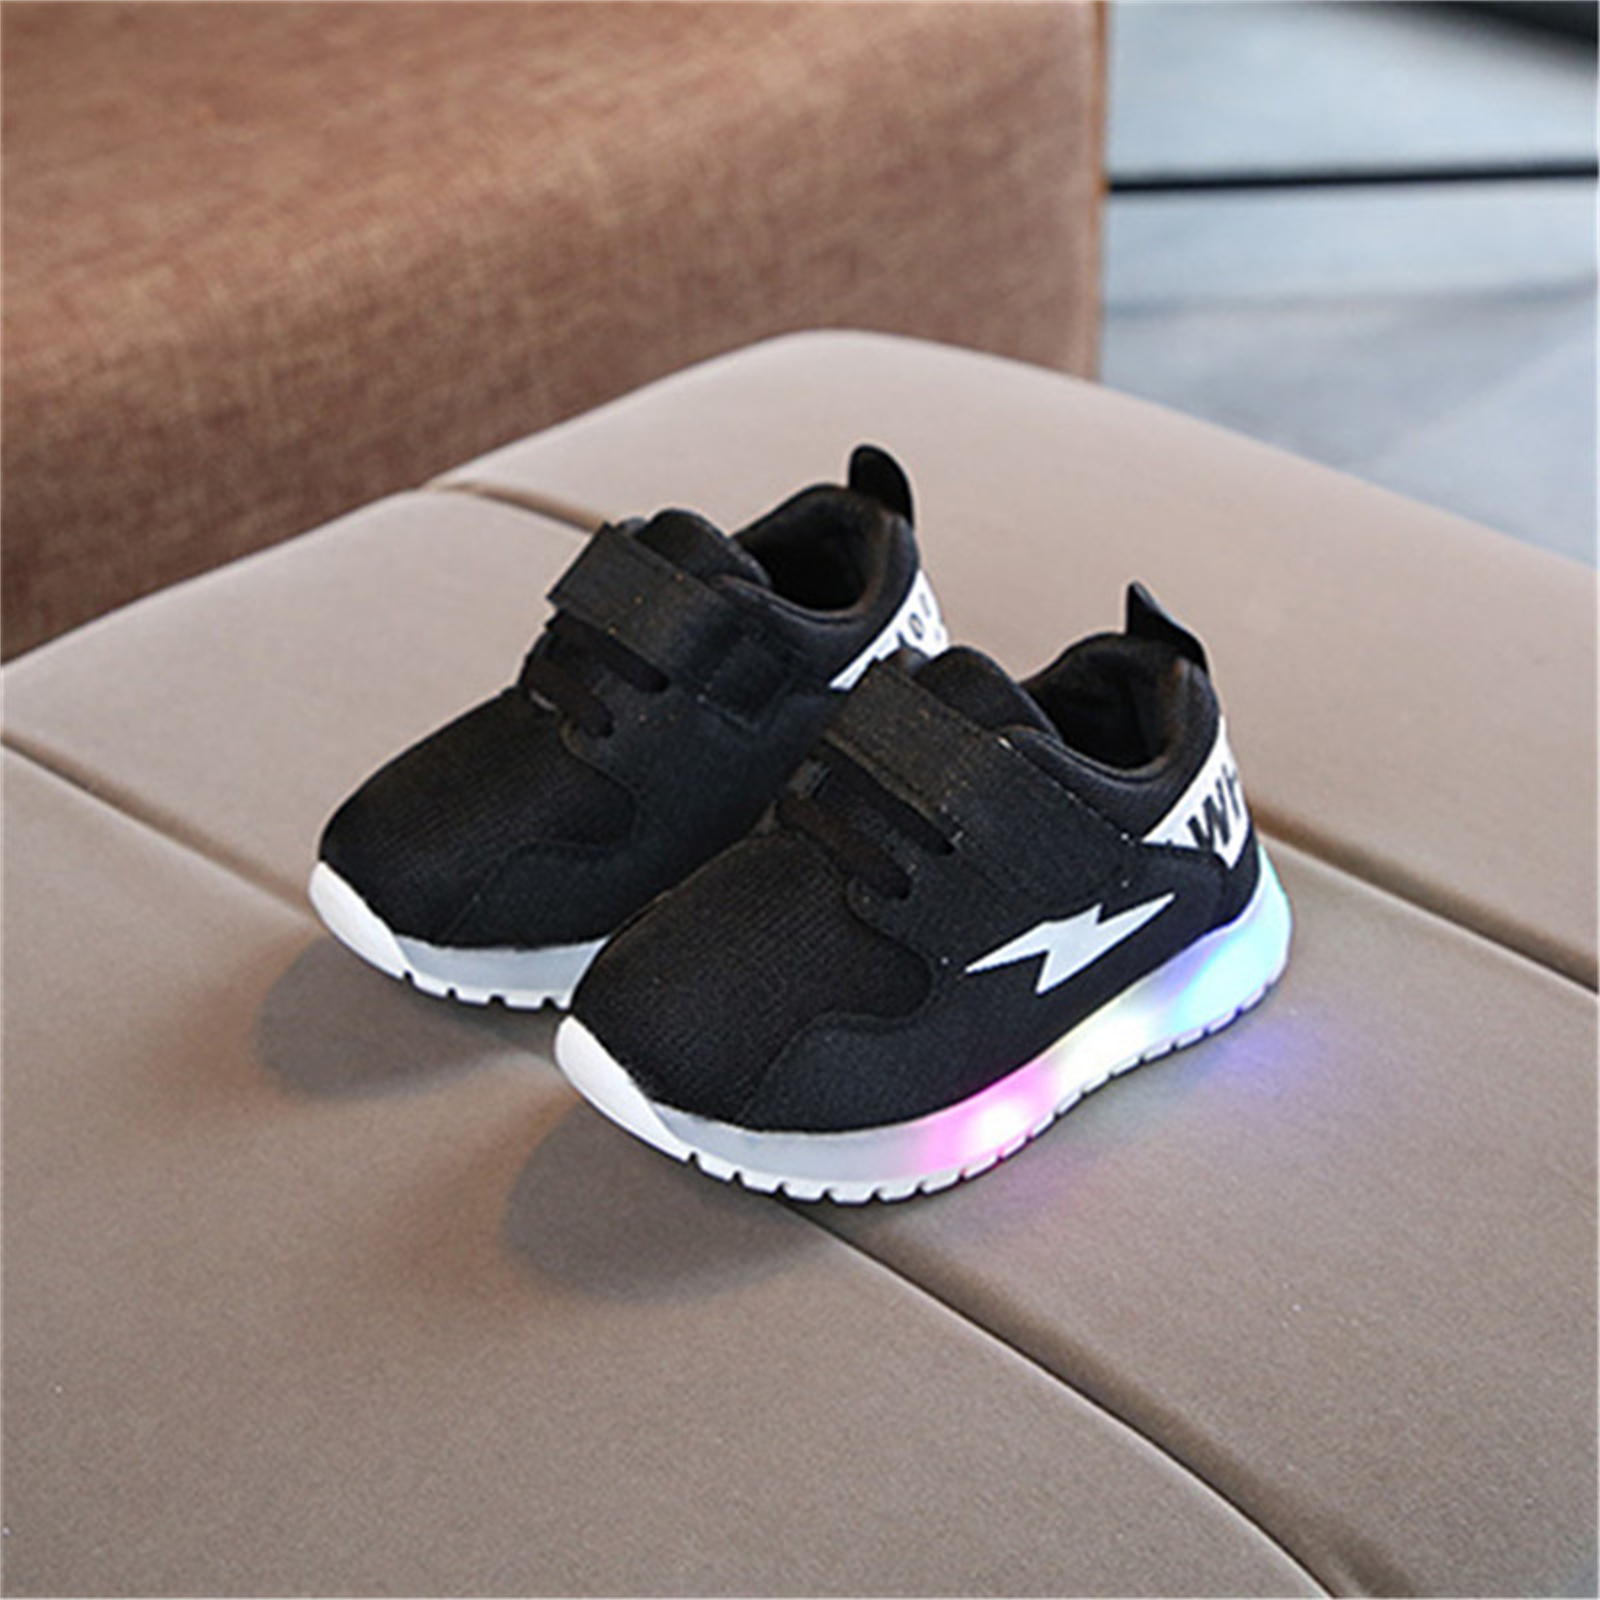 PatPat Toddler Shoes Girls Boys Sneakers Light Up Shiny LED Lightning ...